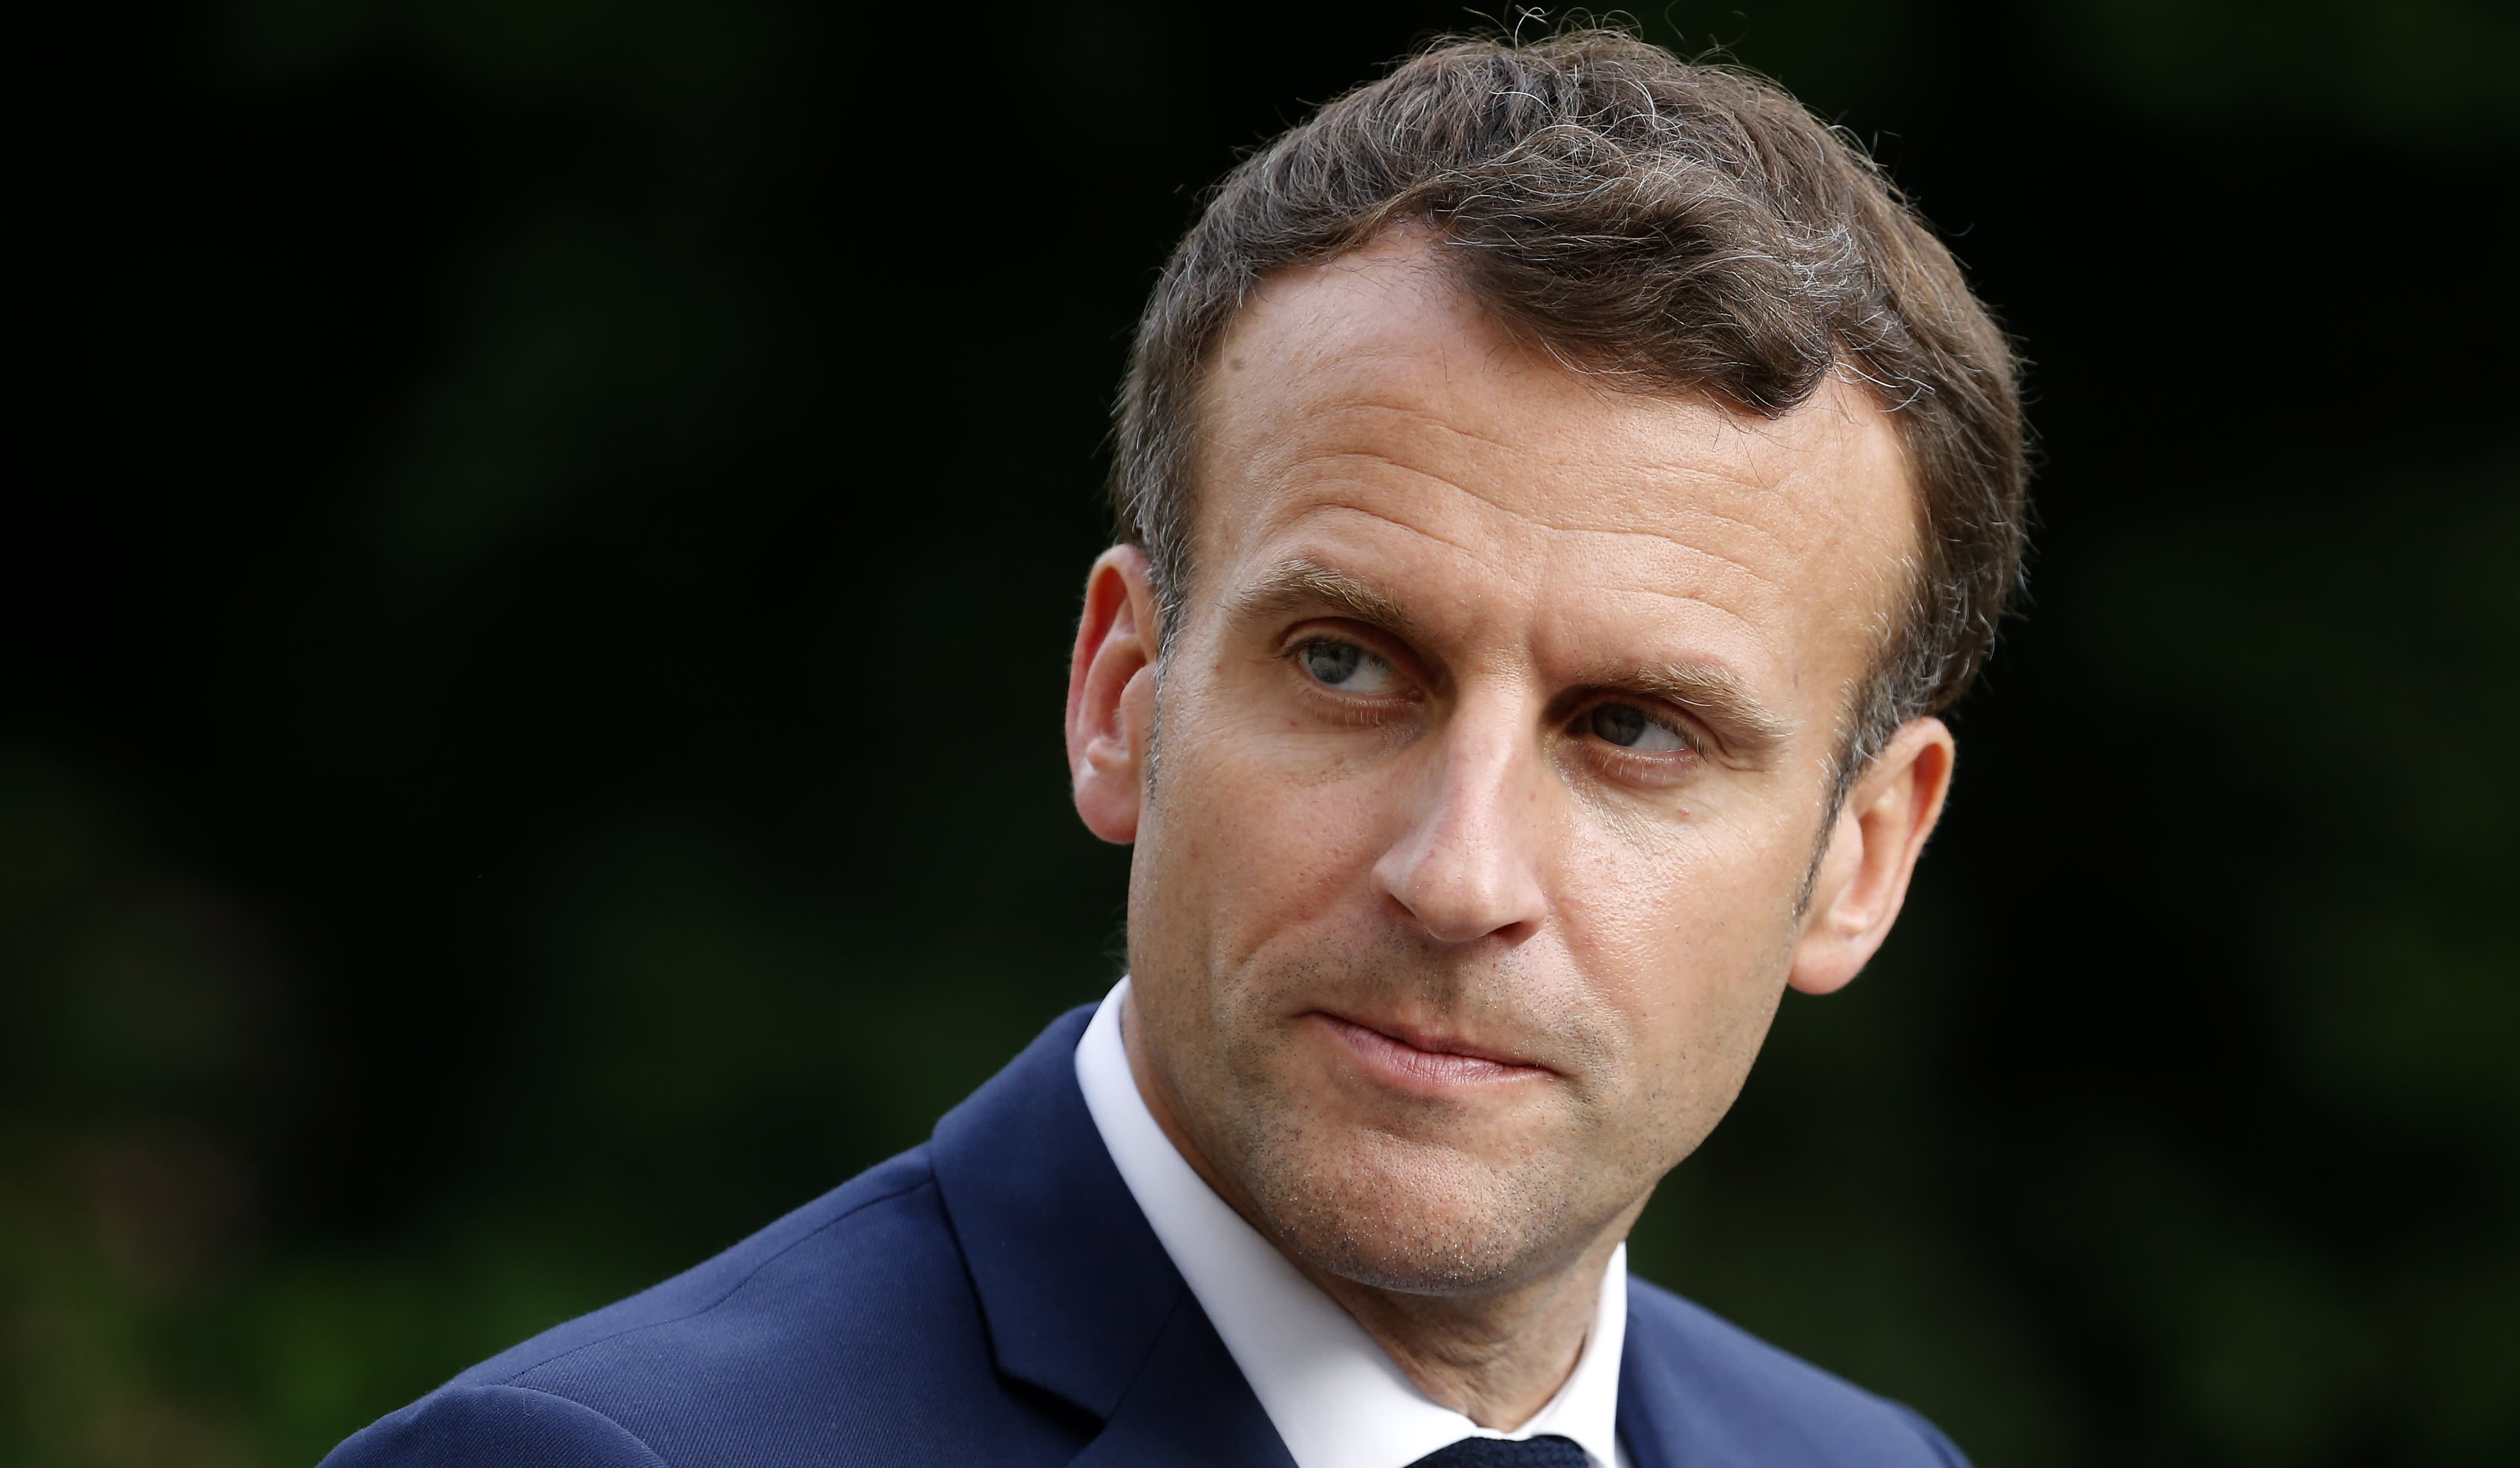 Macron hailed US-Russia dialogue